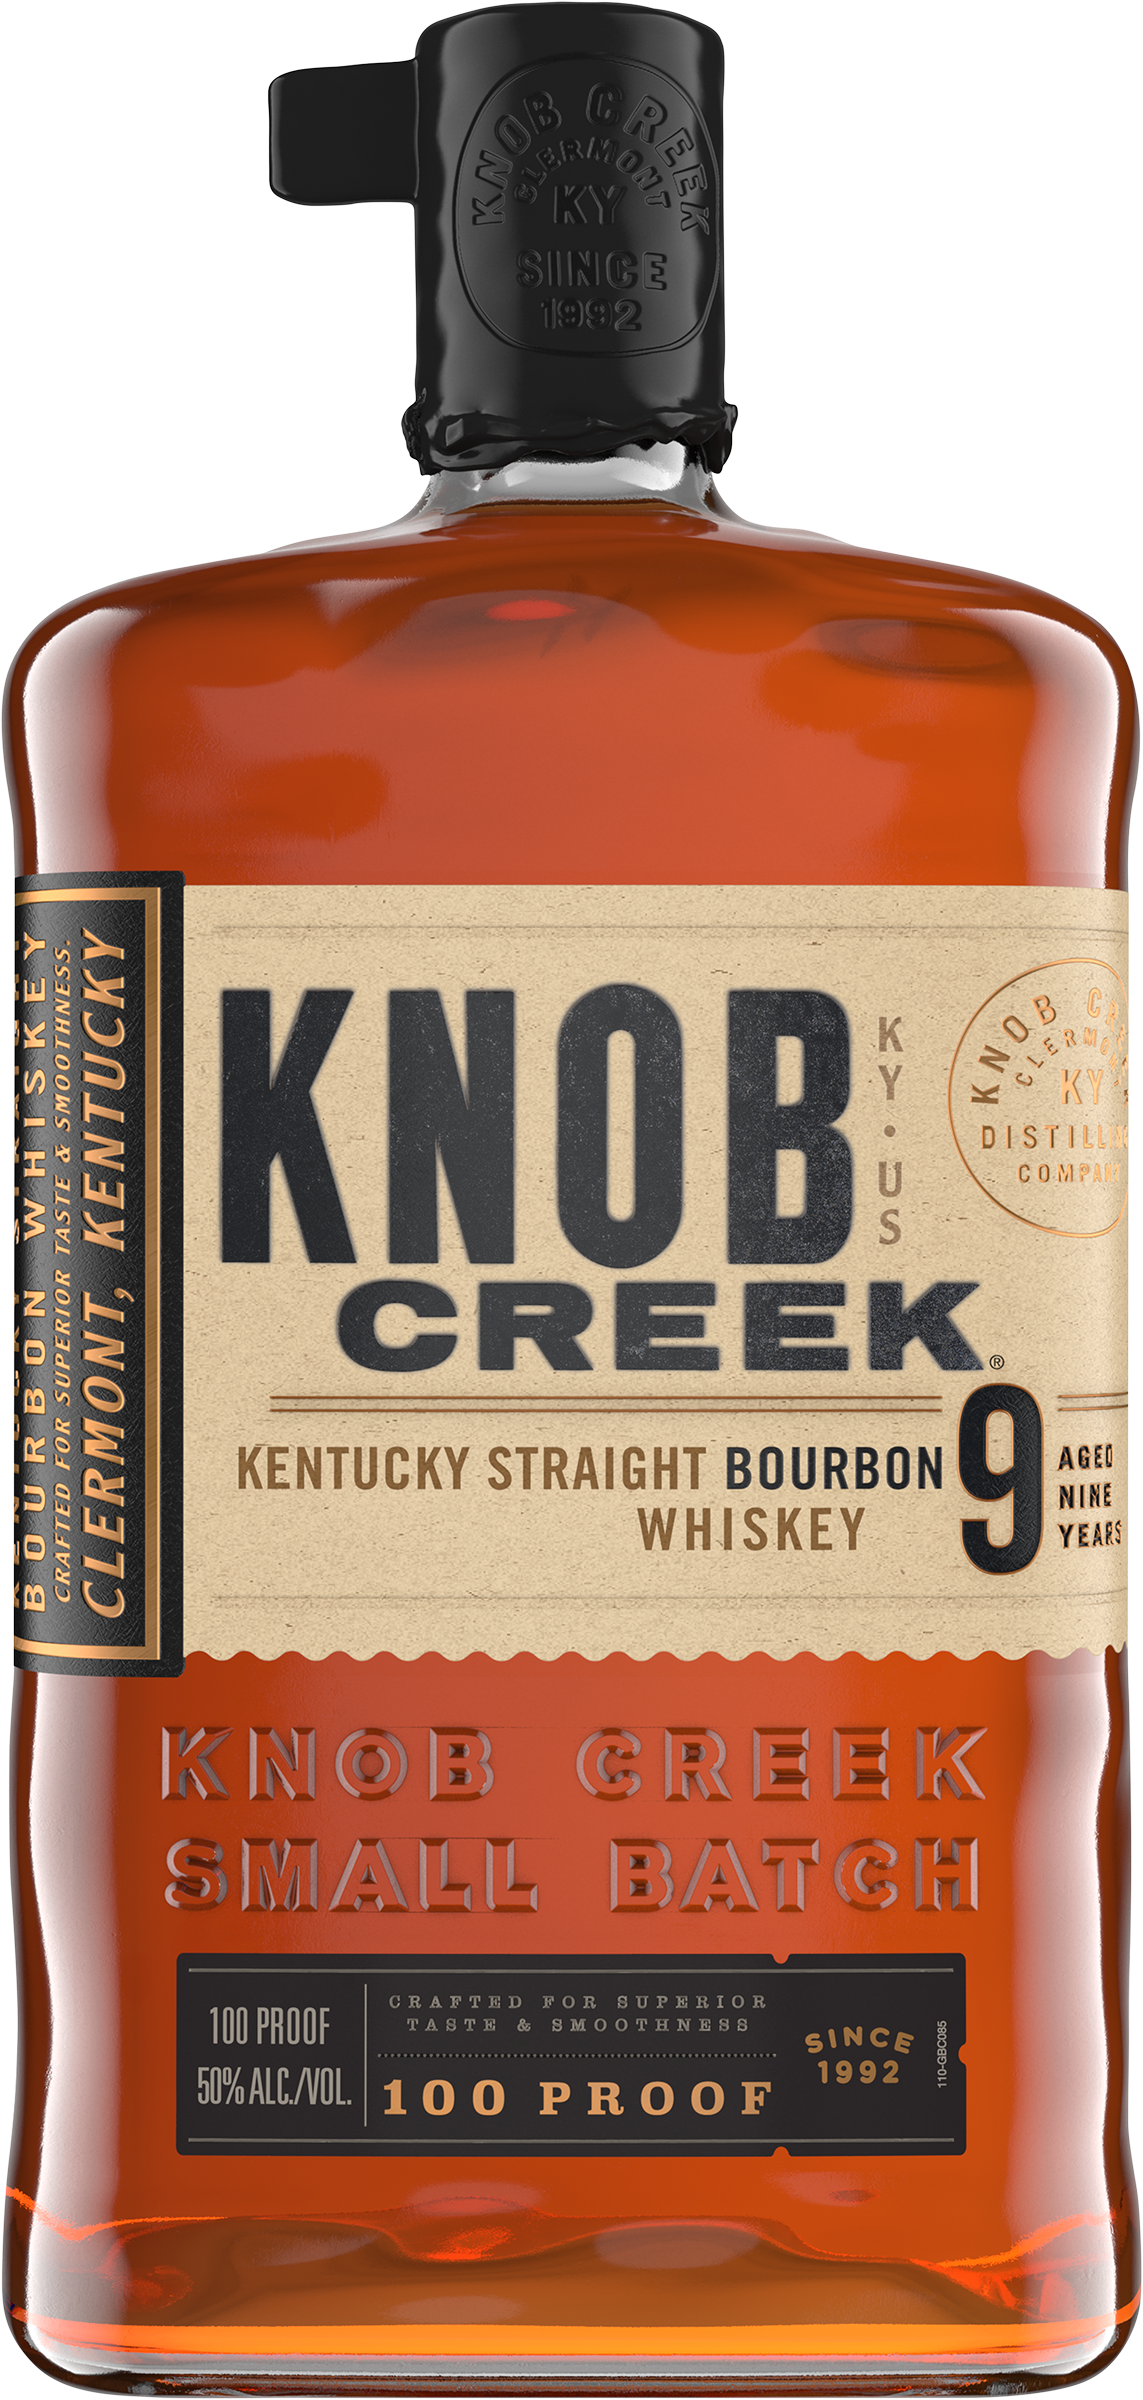 Knob Creek Kentucky Straight Bourbon Whiskey, Whisky Americain 50